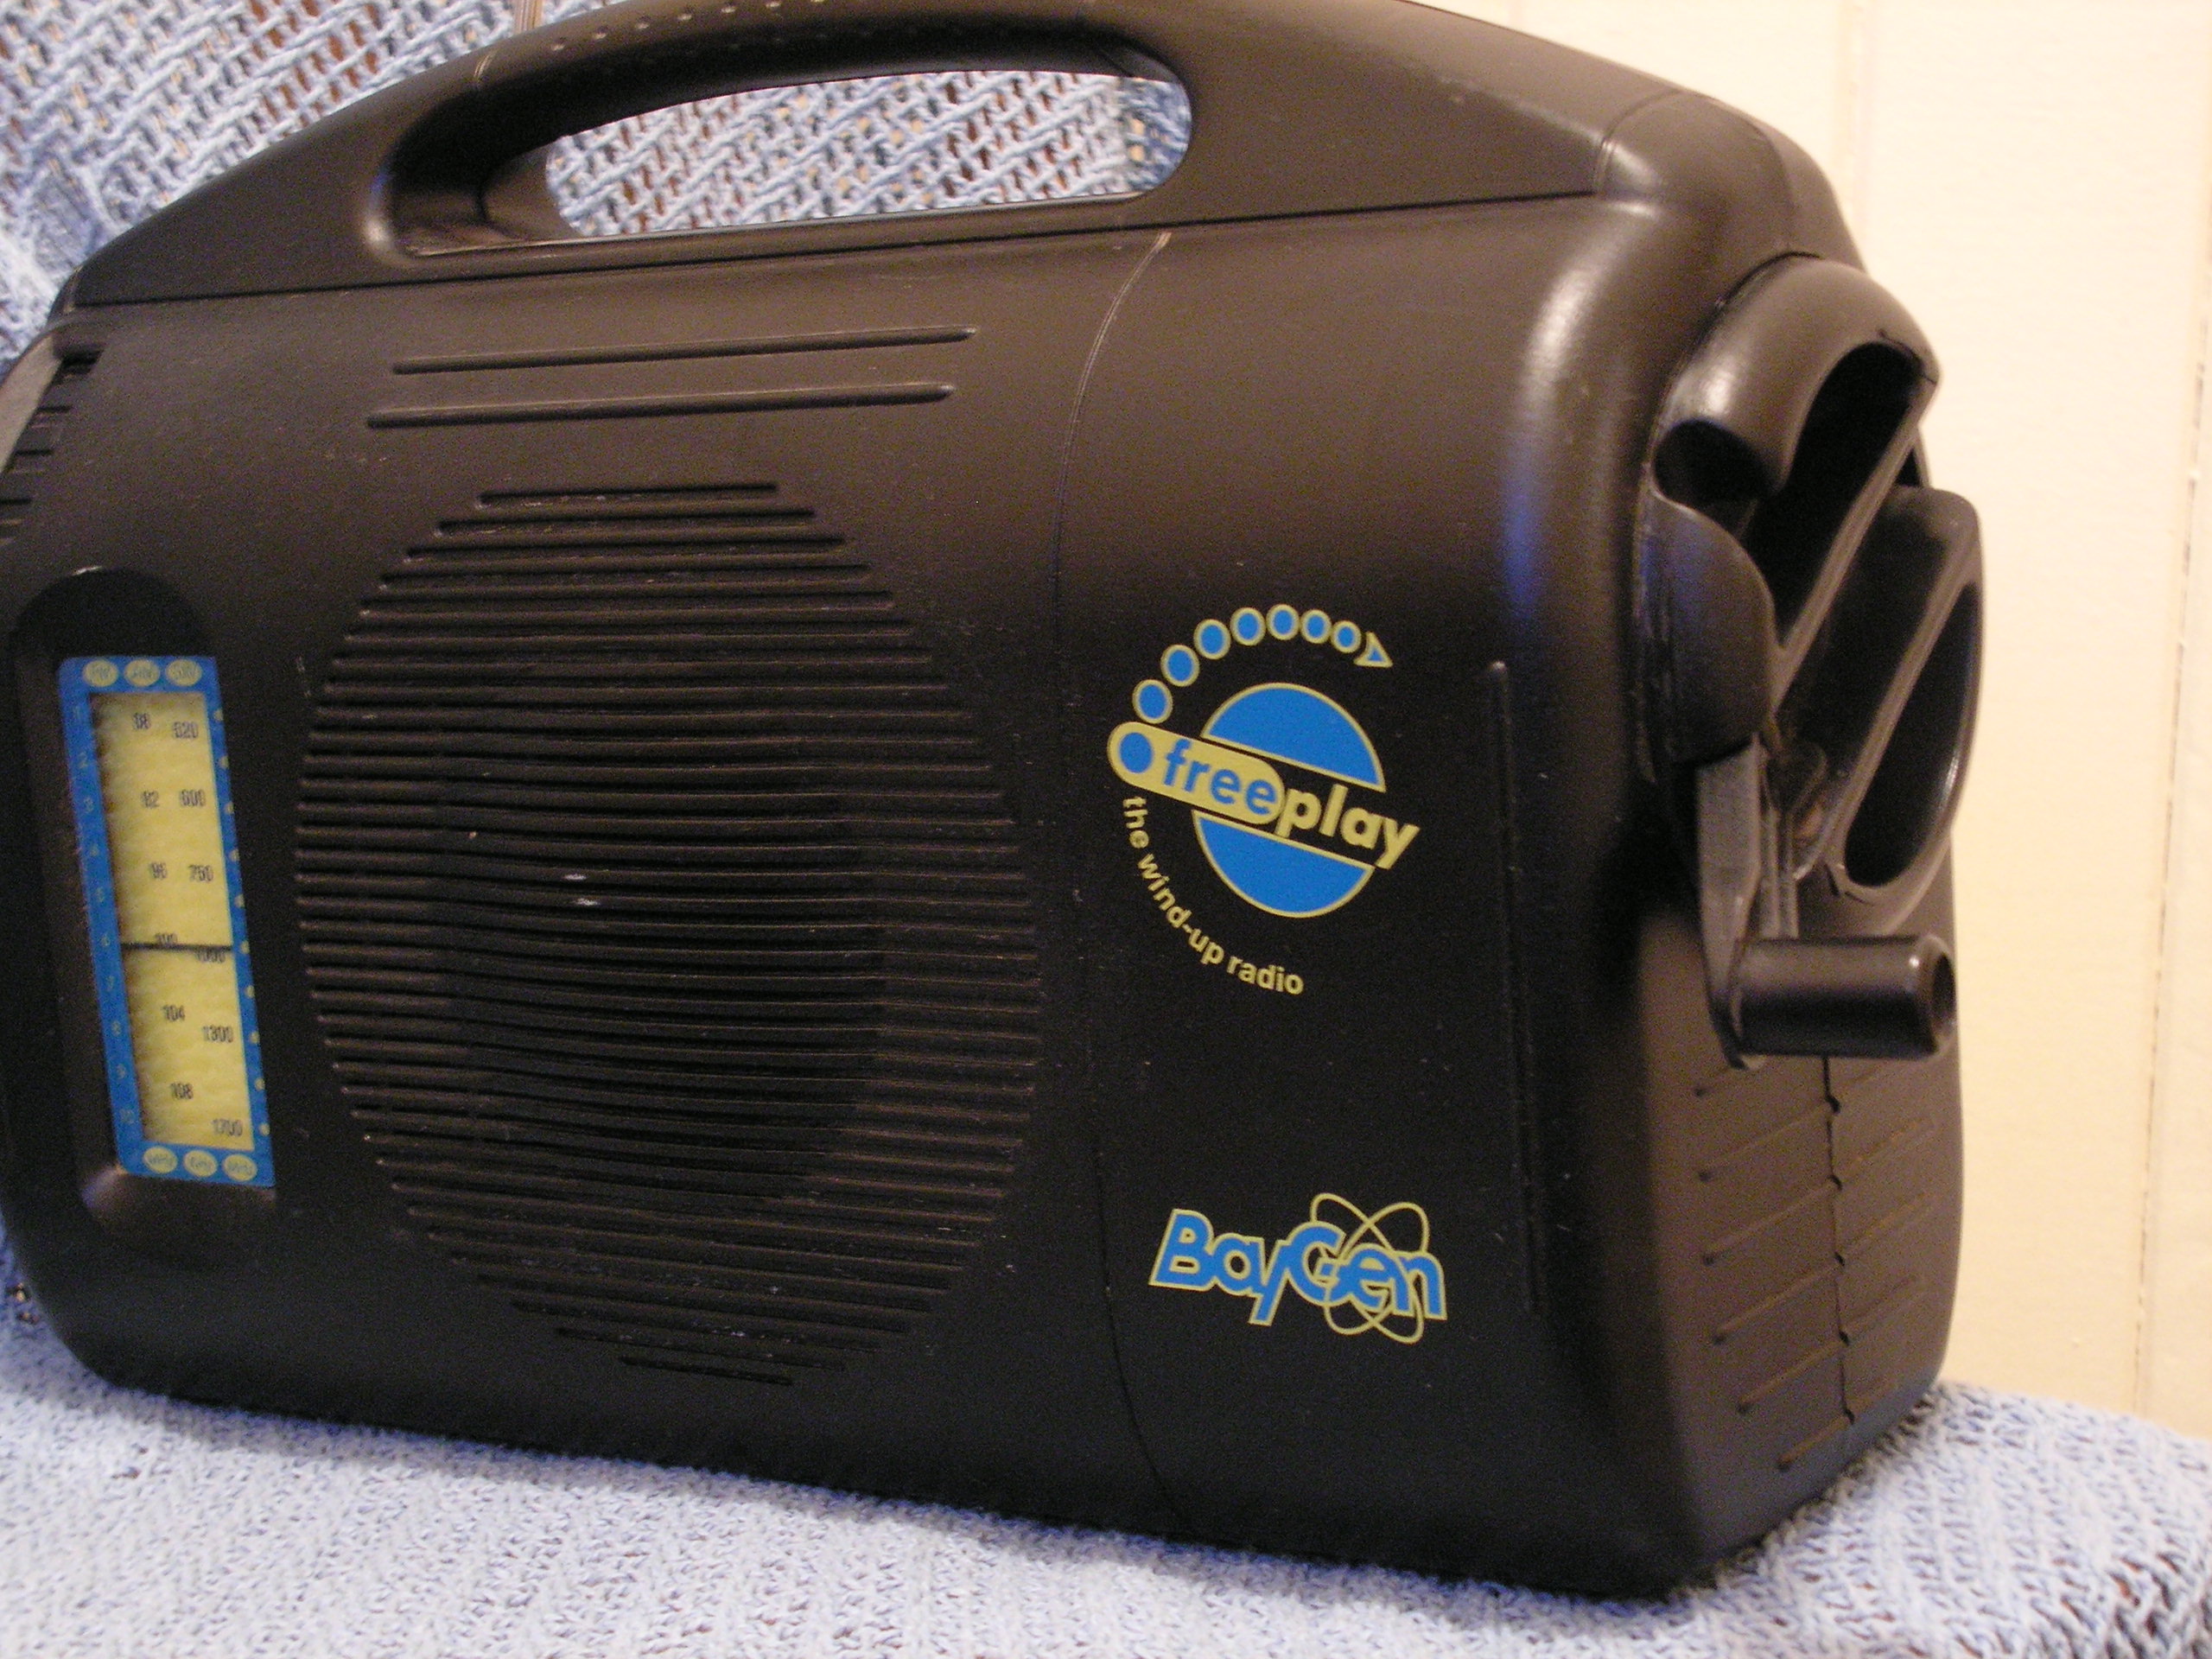 Batteryless radio - Wikipedia